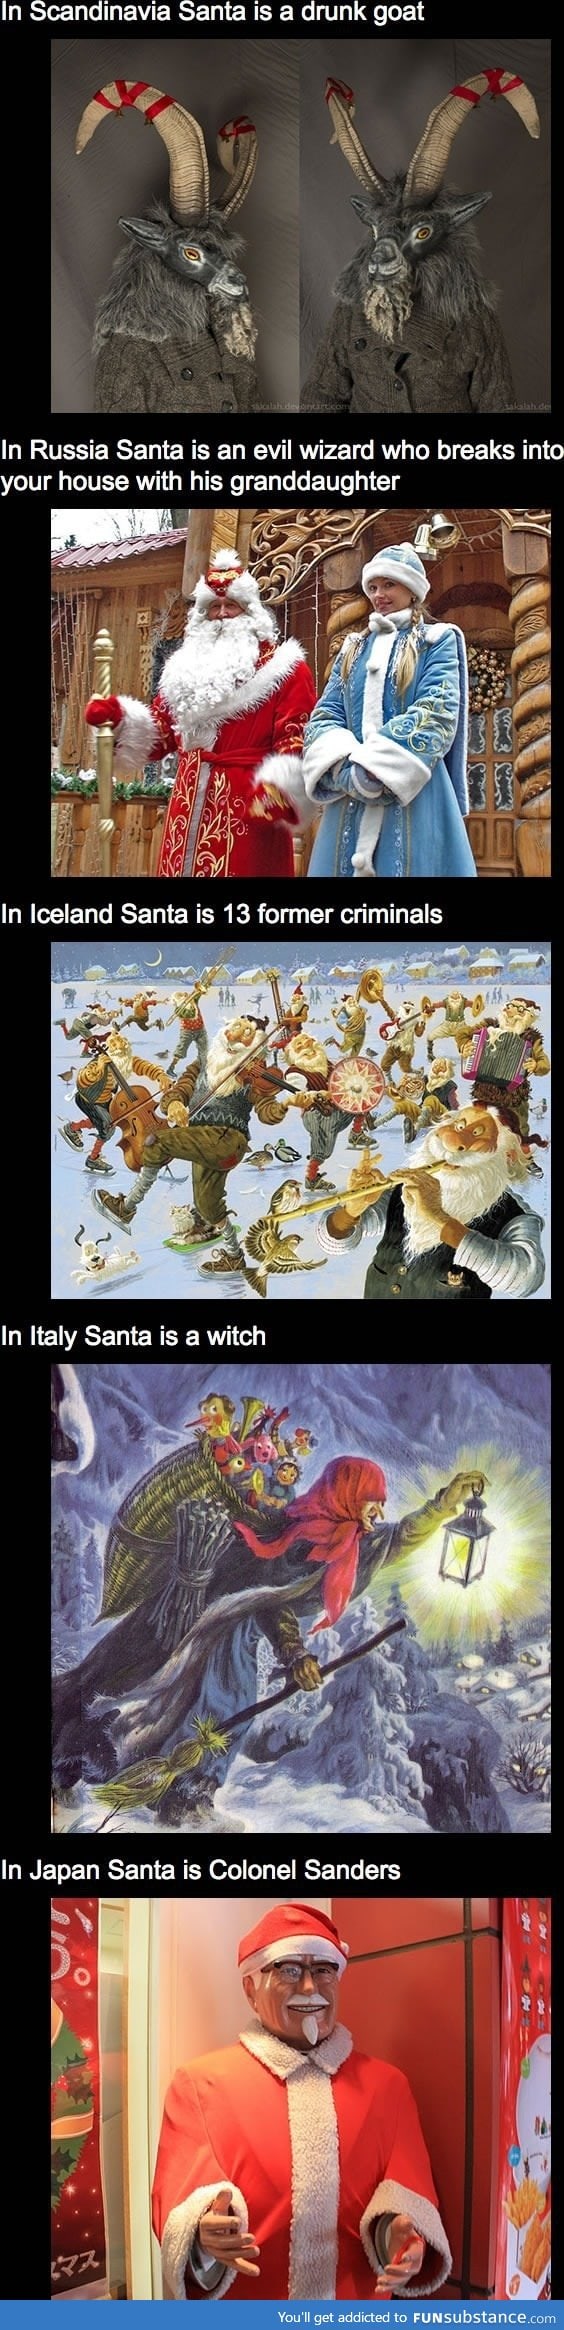 Santas from around the world